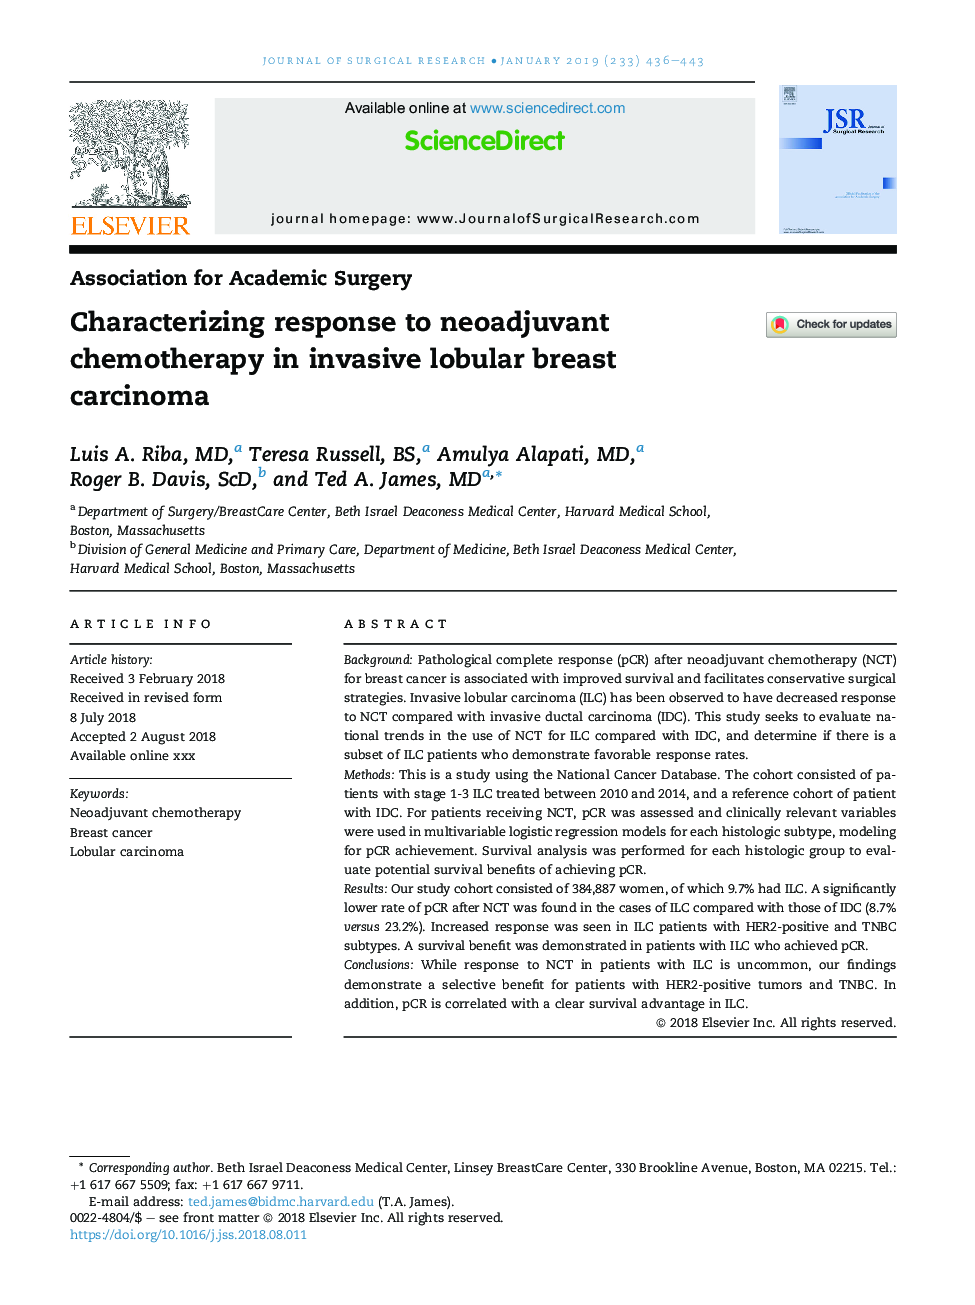 Characterizing response to neoadjuvant chemotherapy in invasive lobular breast carcinoma